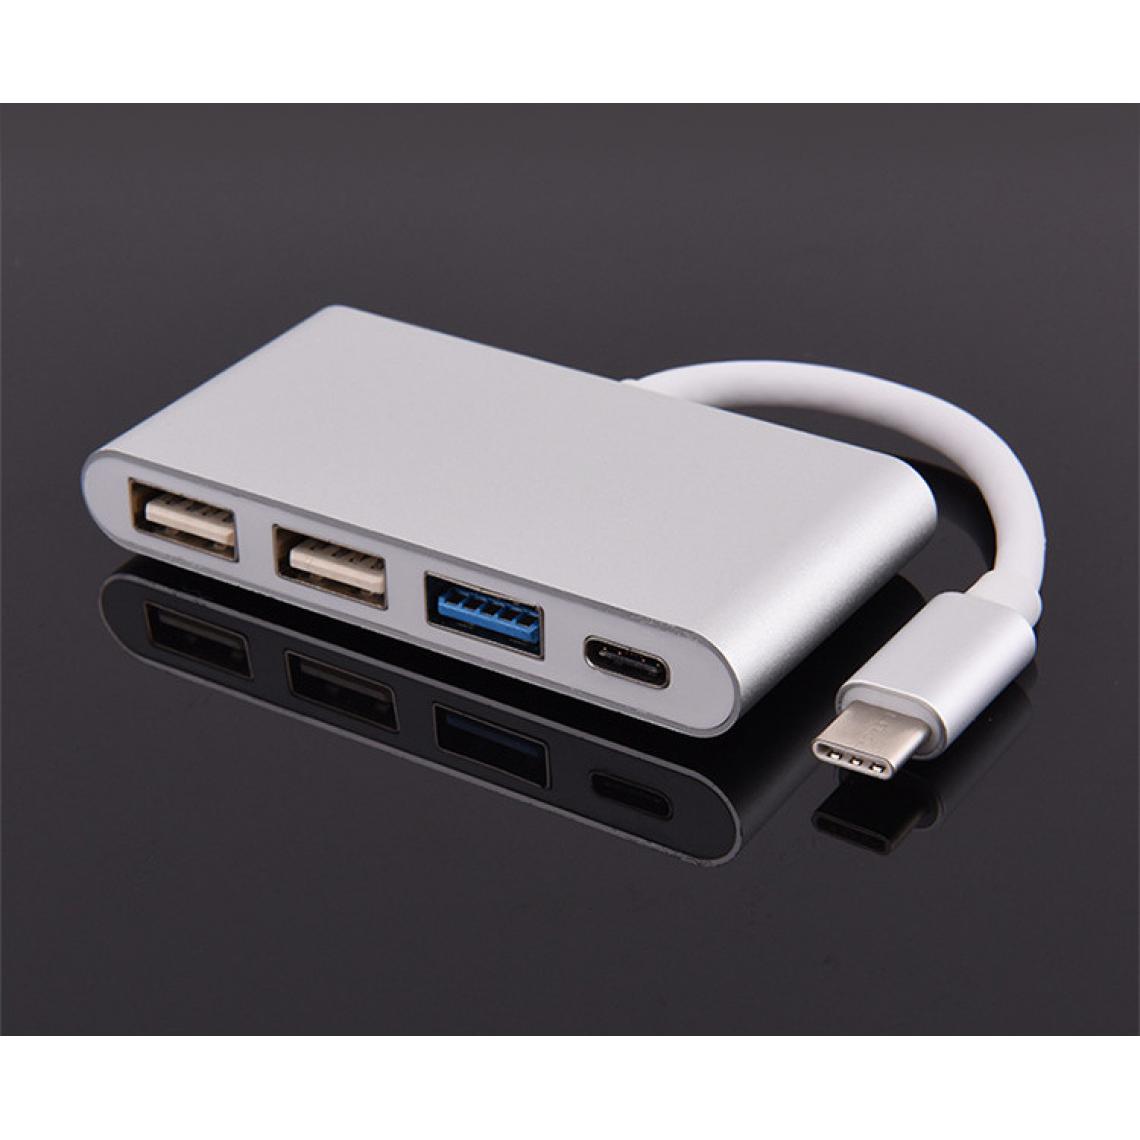 Shot - Multi Adaptateur 4 en 1 Type C pour SONY Xperia X Compact Smartphone Hub 2 ports USB 2.0 1 Port USB 3.0 (ARGENT) - Hub